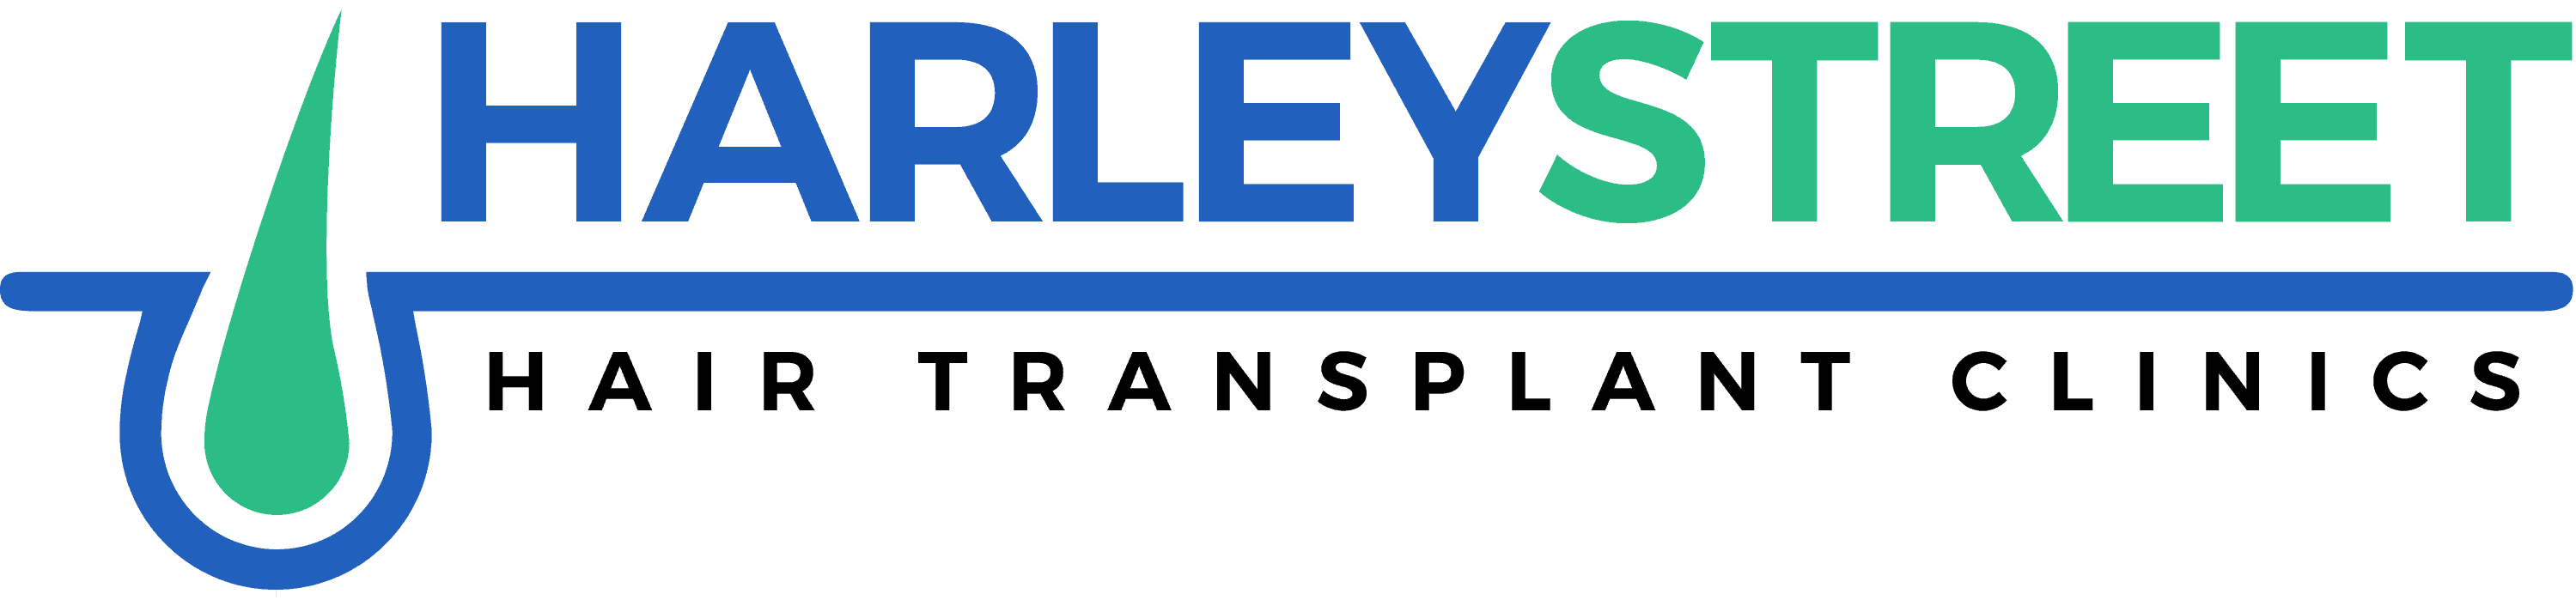 Harley Street Hair Transplant Clinic Nottingham logo